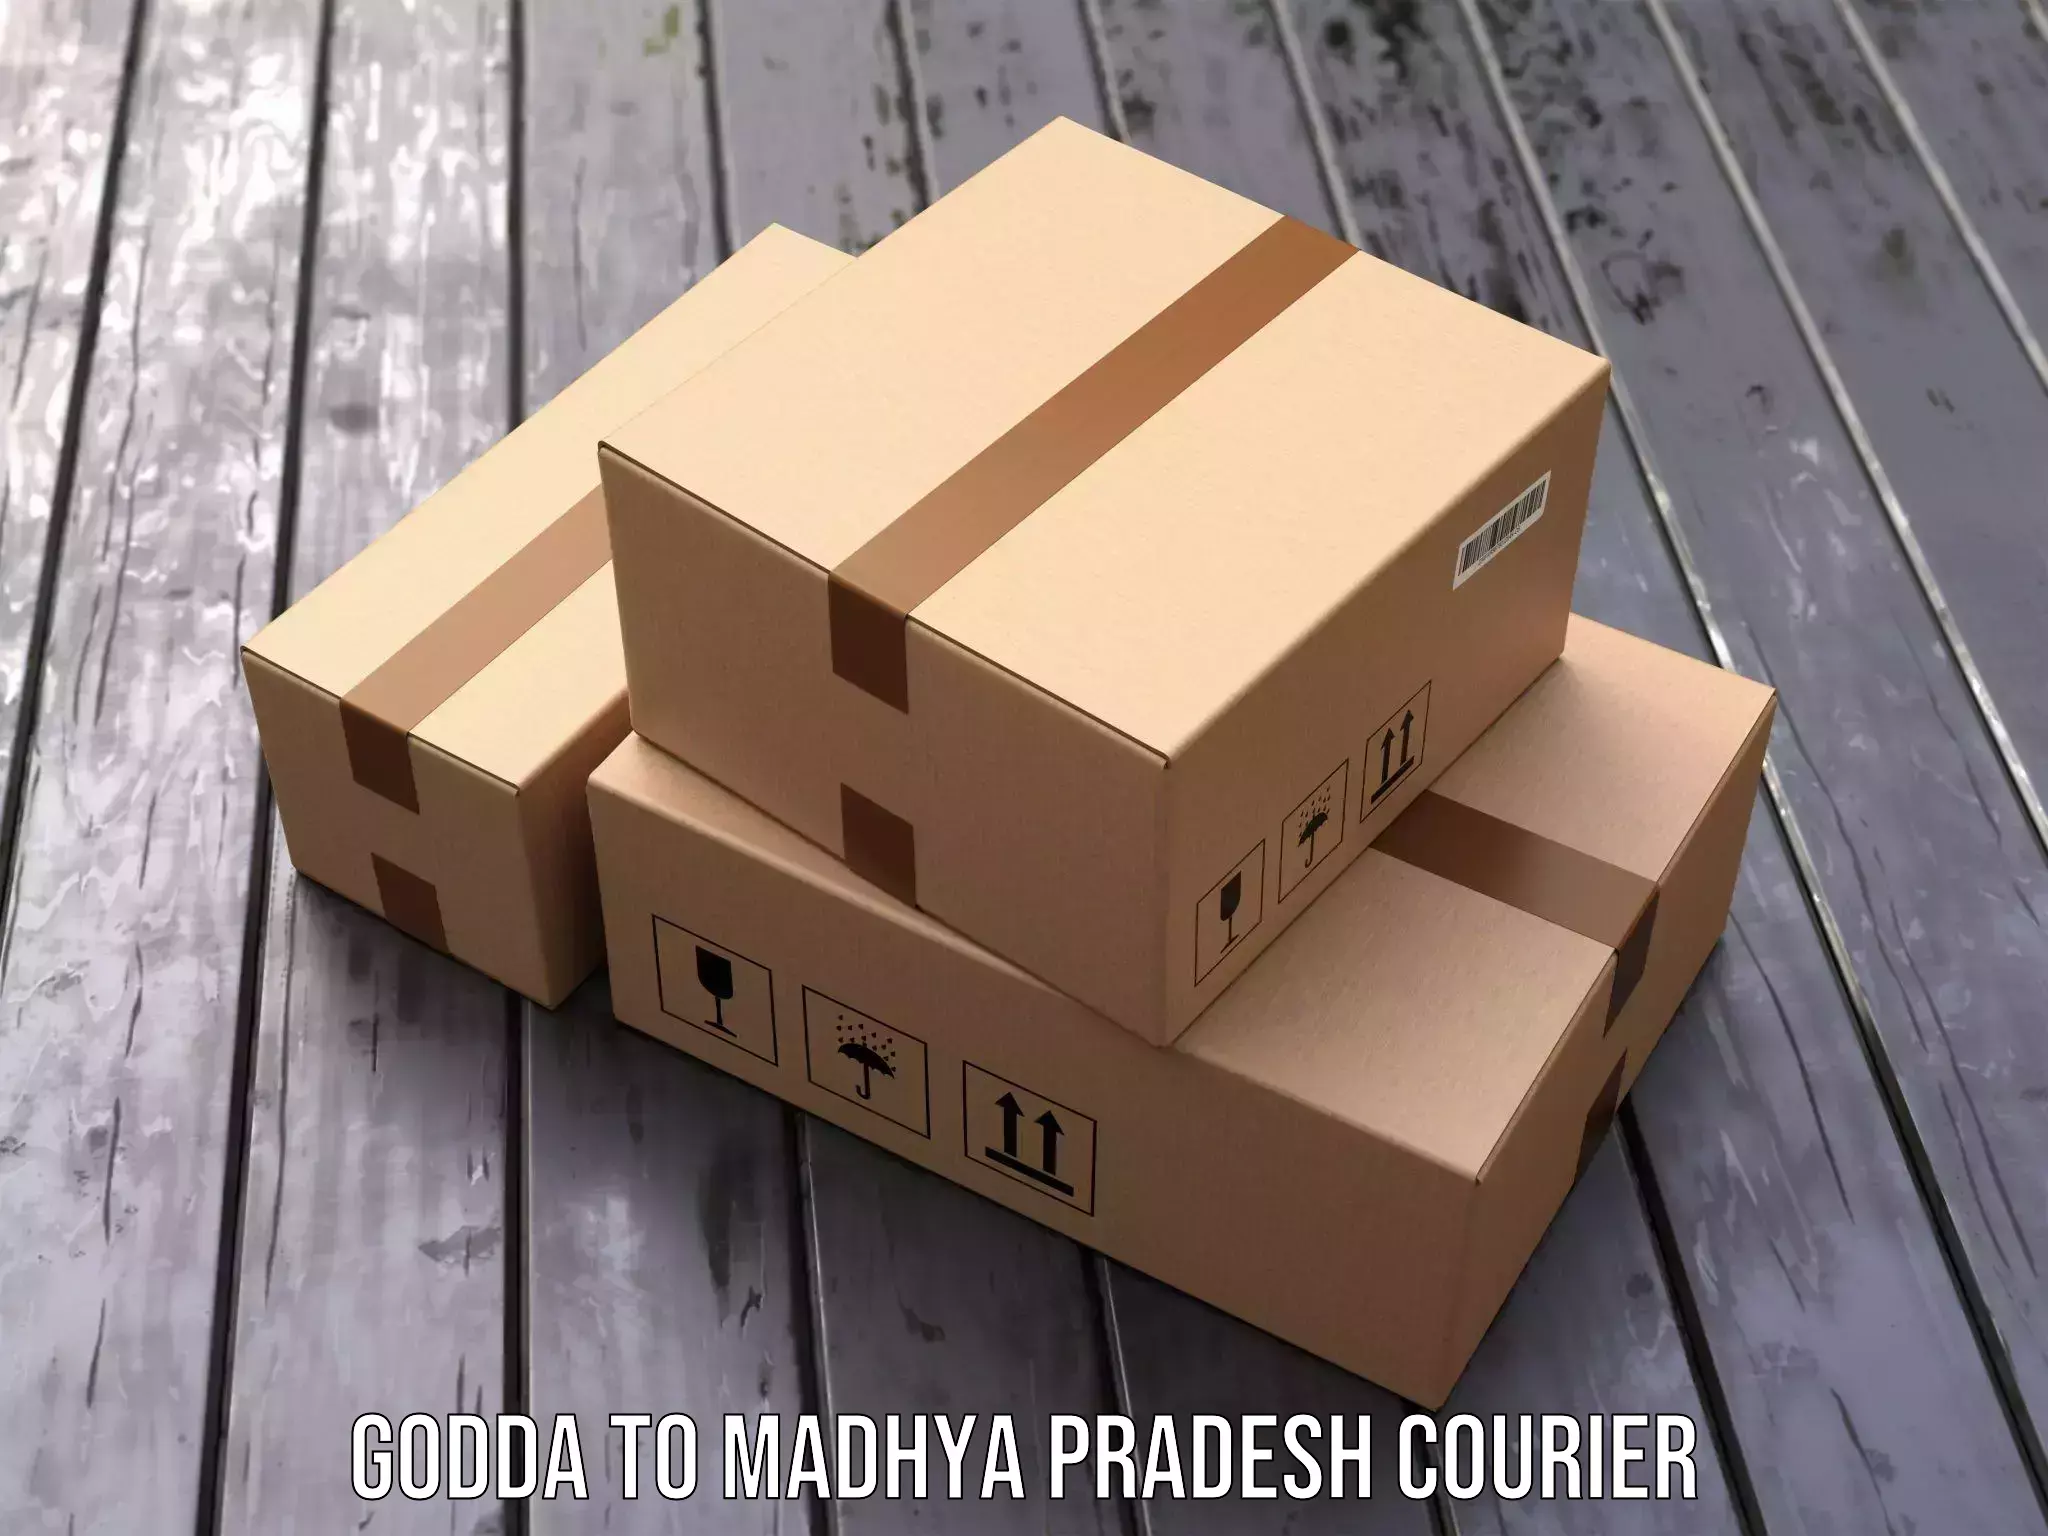 High-speed parcel service Godda to Mandsaur